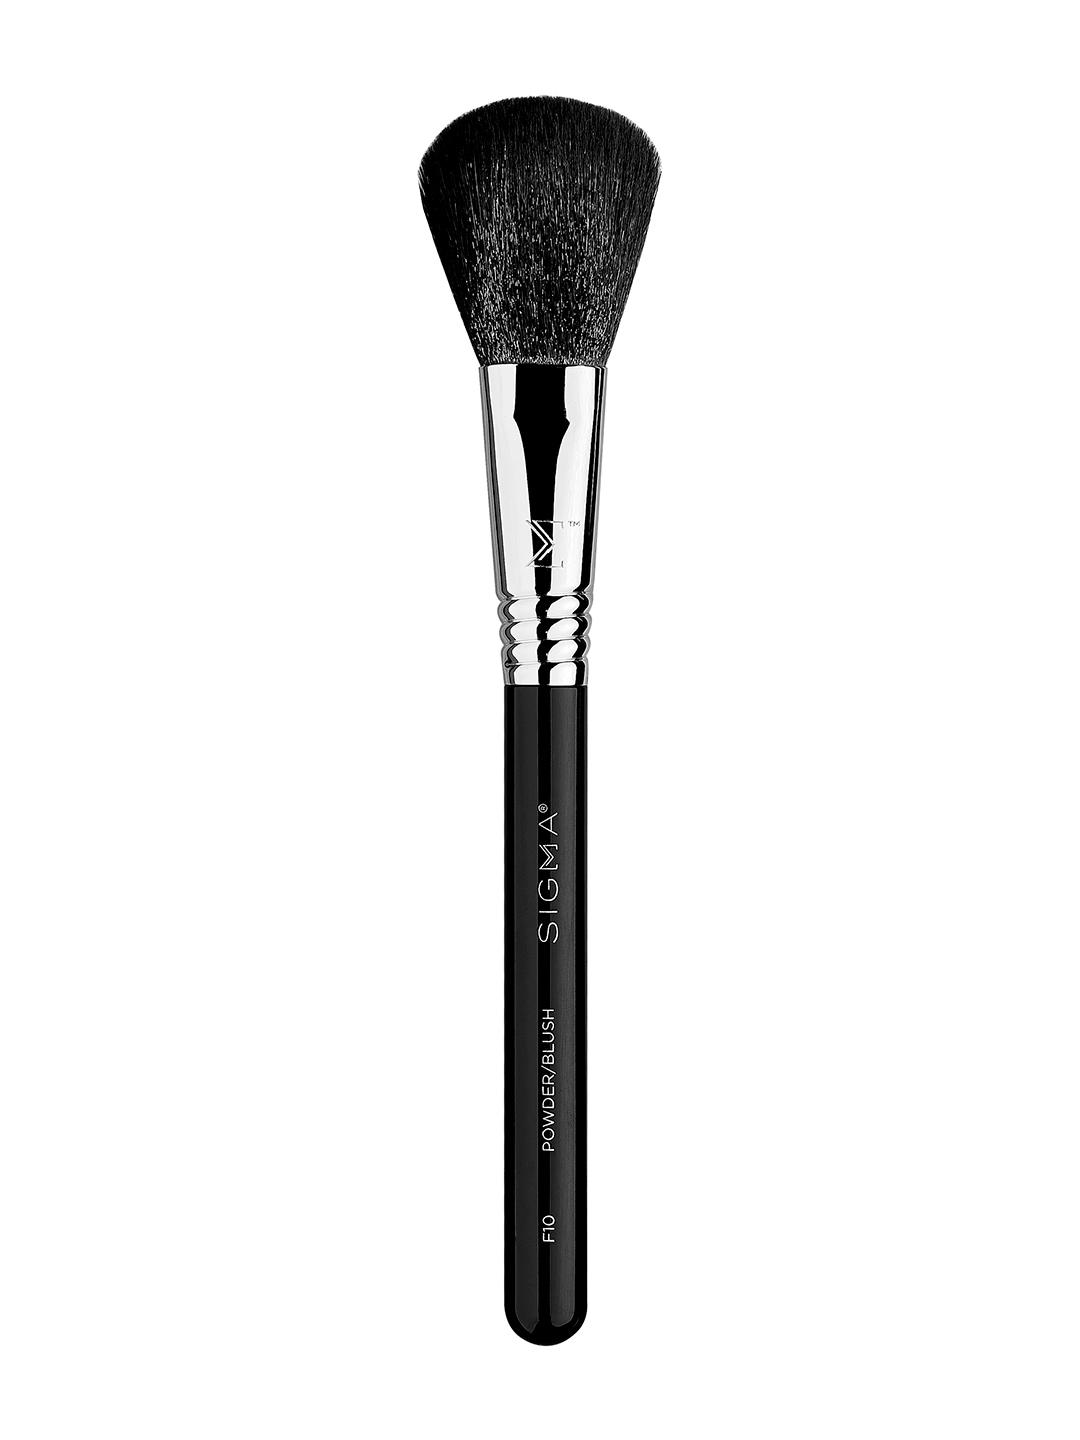 sigma beauty powder / blush brush f10 - black